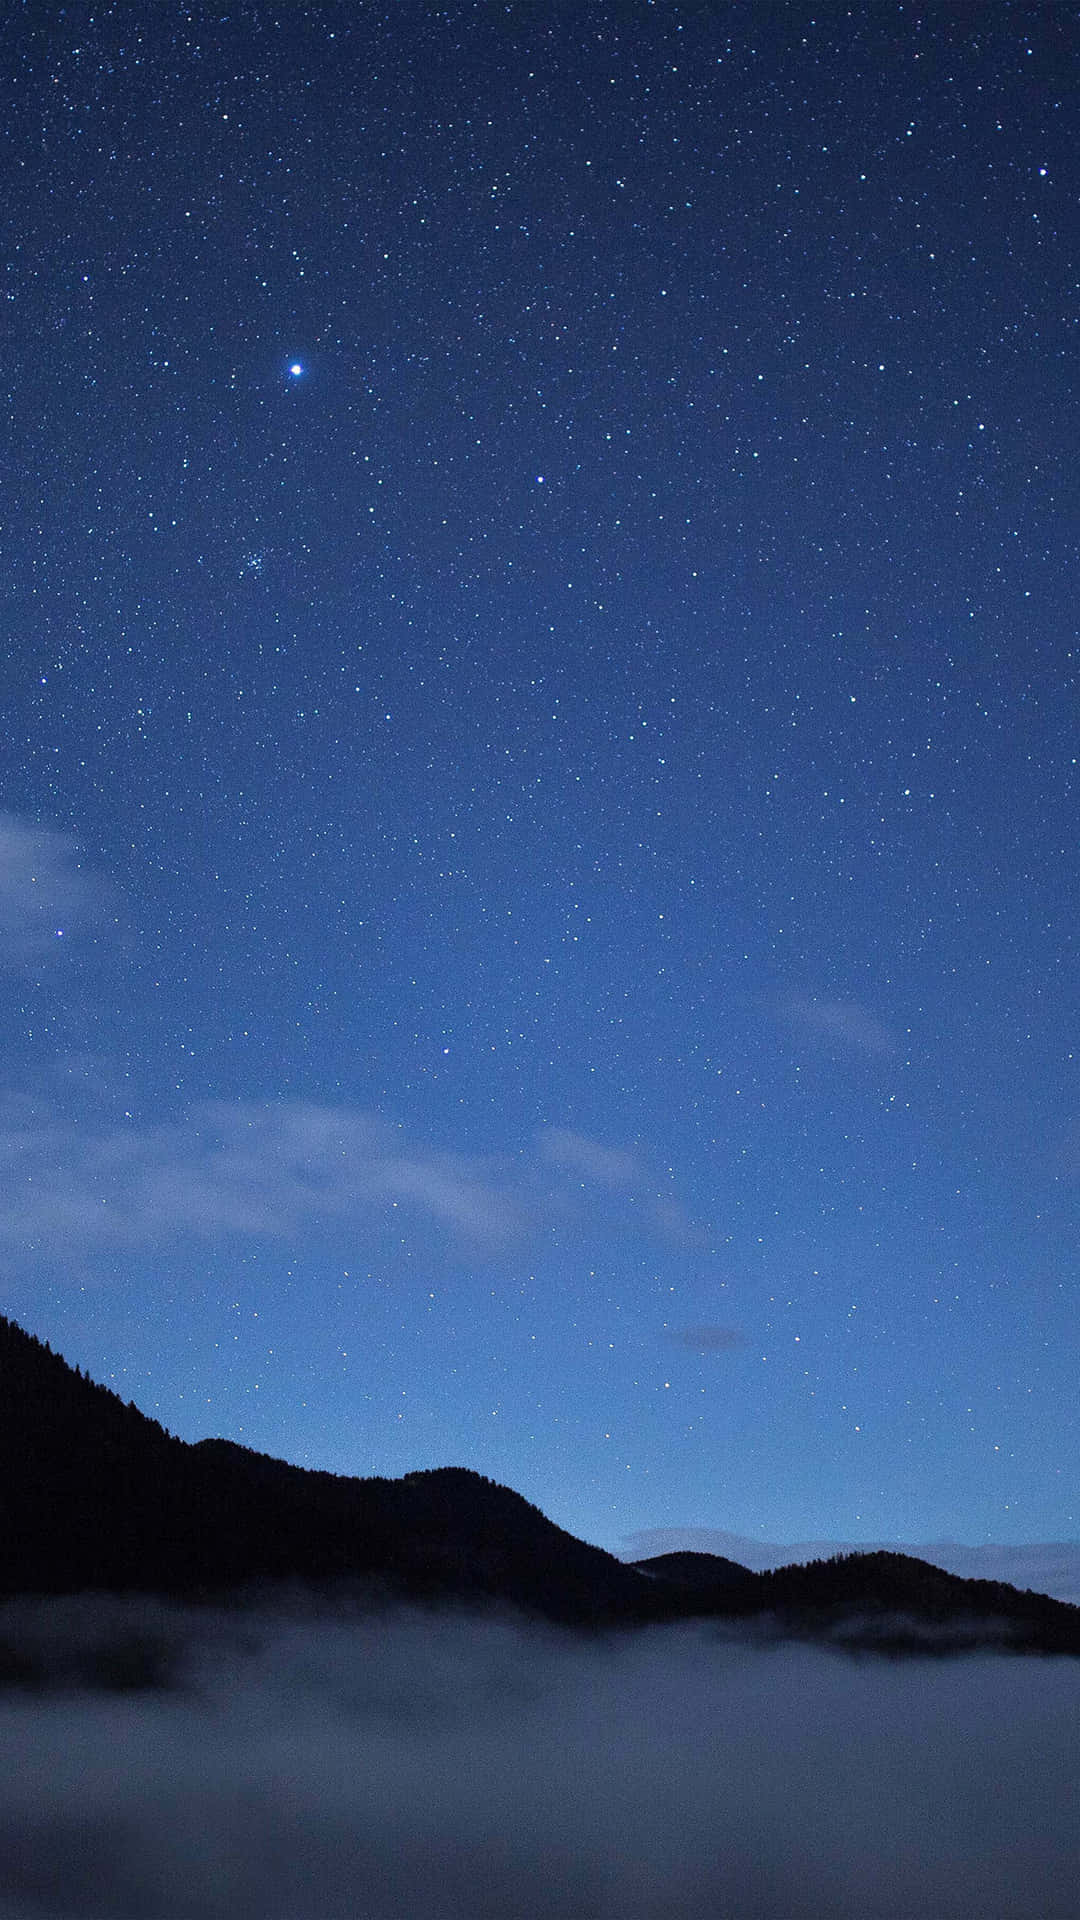 A beautiful blue star sparkles brightly against a deep night sky.